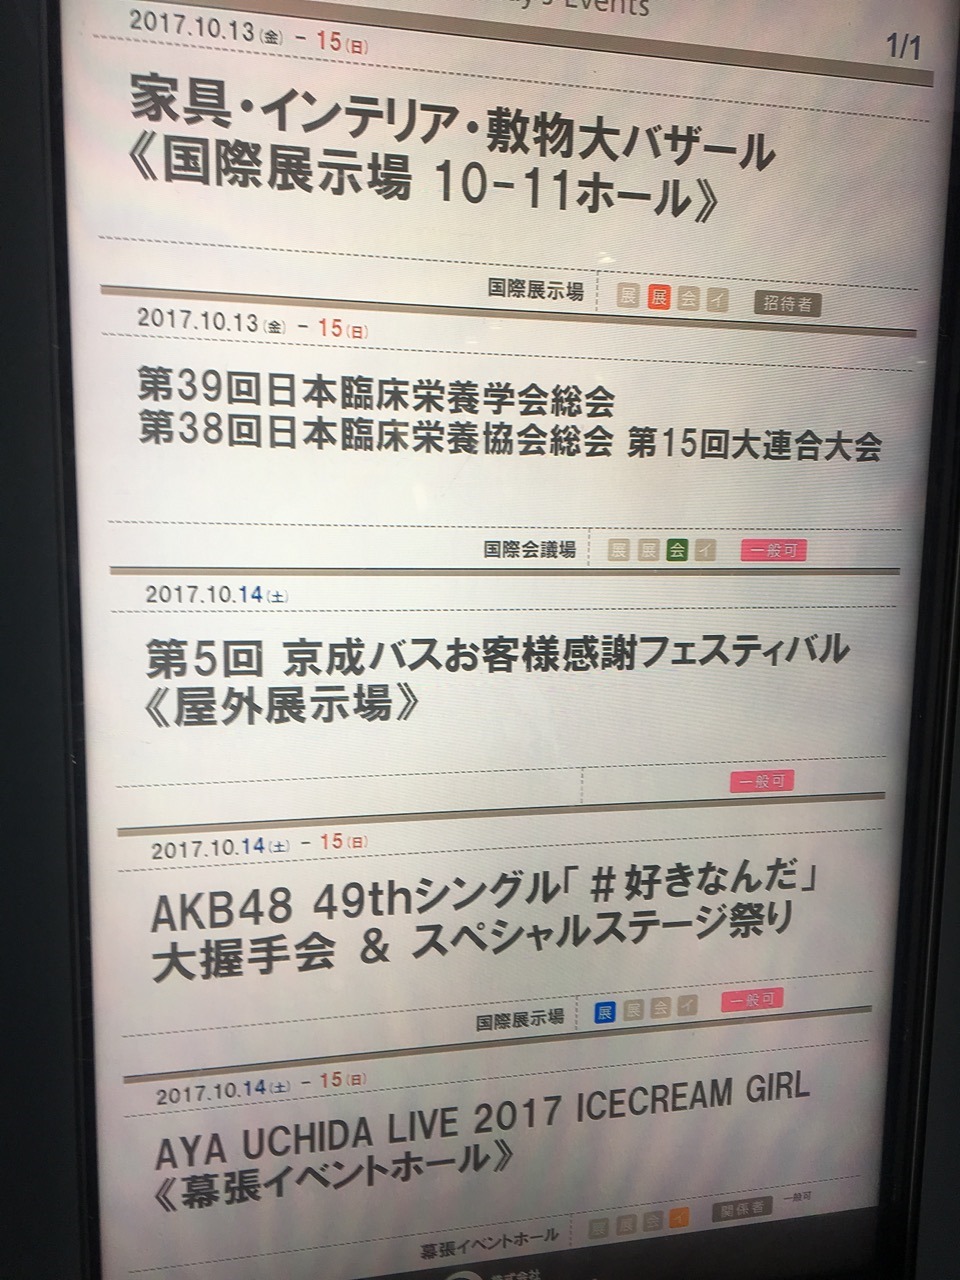 Aya Uchida Live17 Icecream Girl セットリスト レポート Air Be Blog